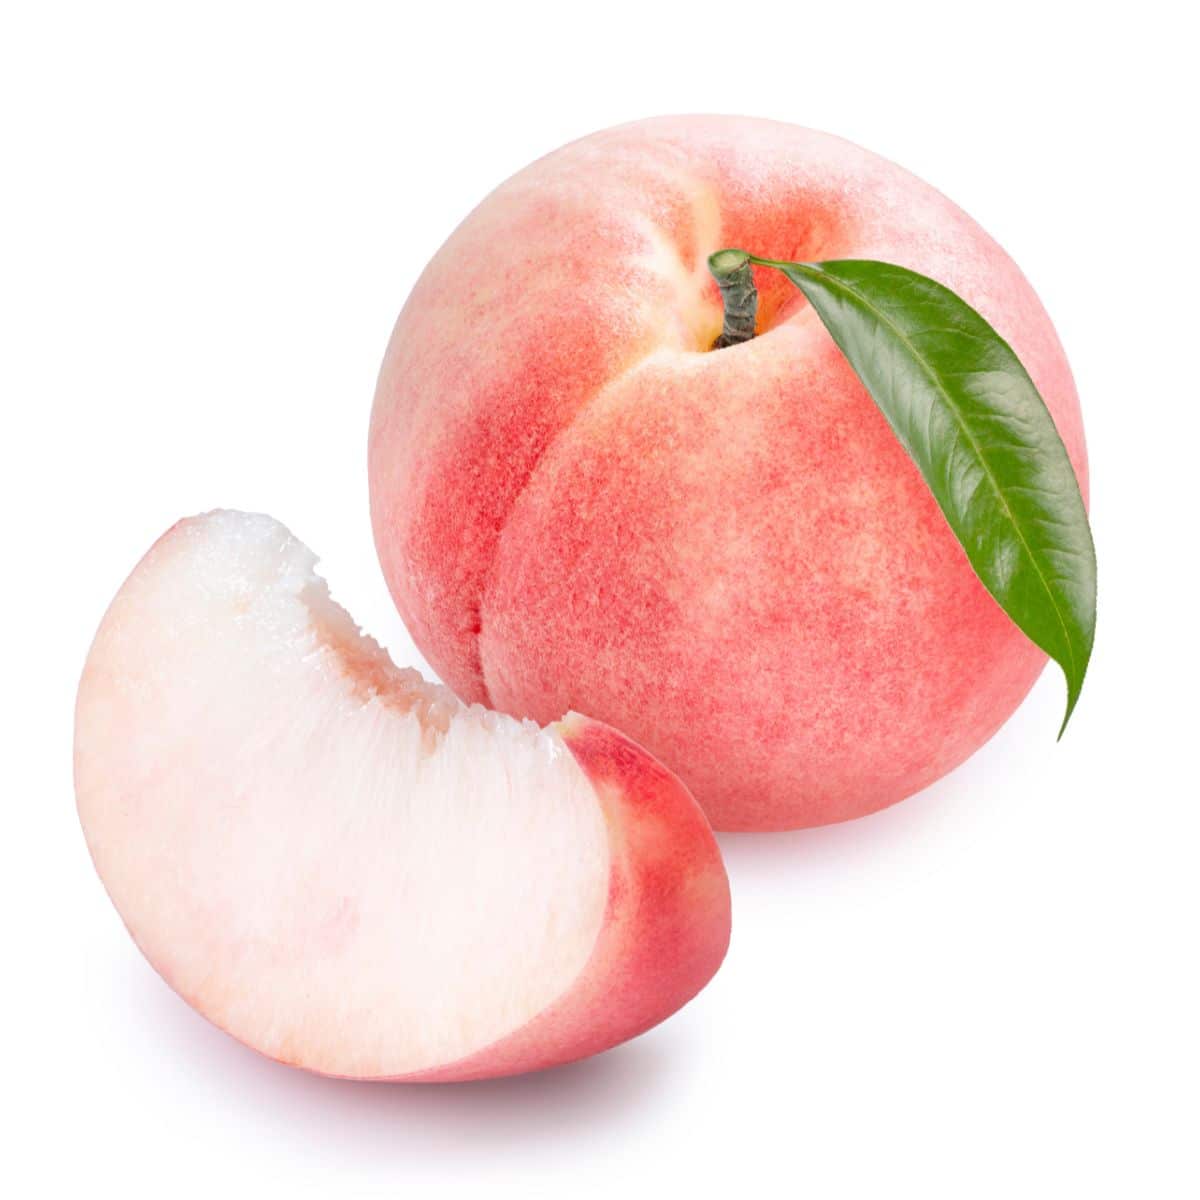 A white peach on a white background.